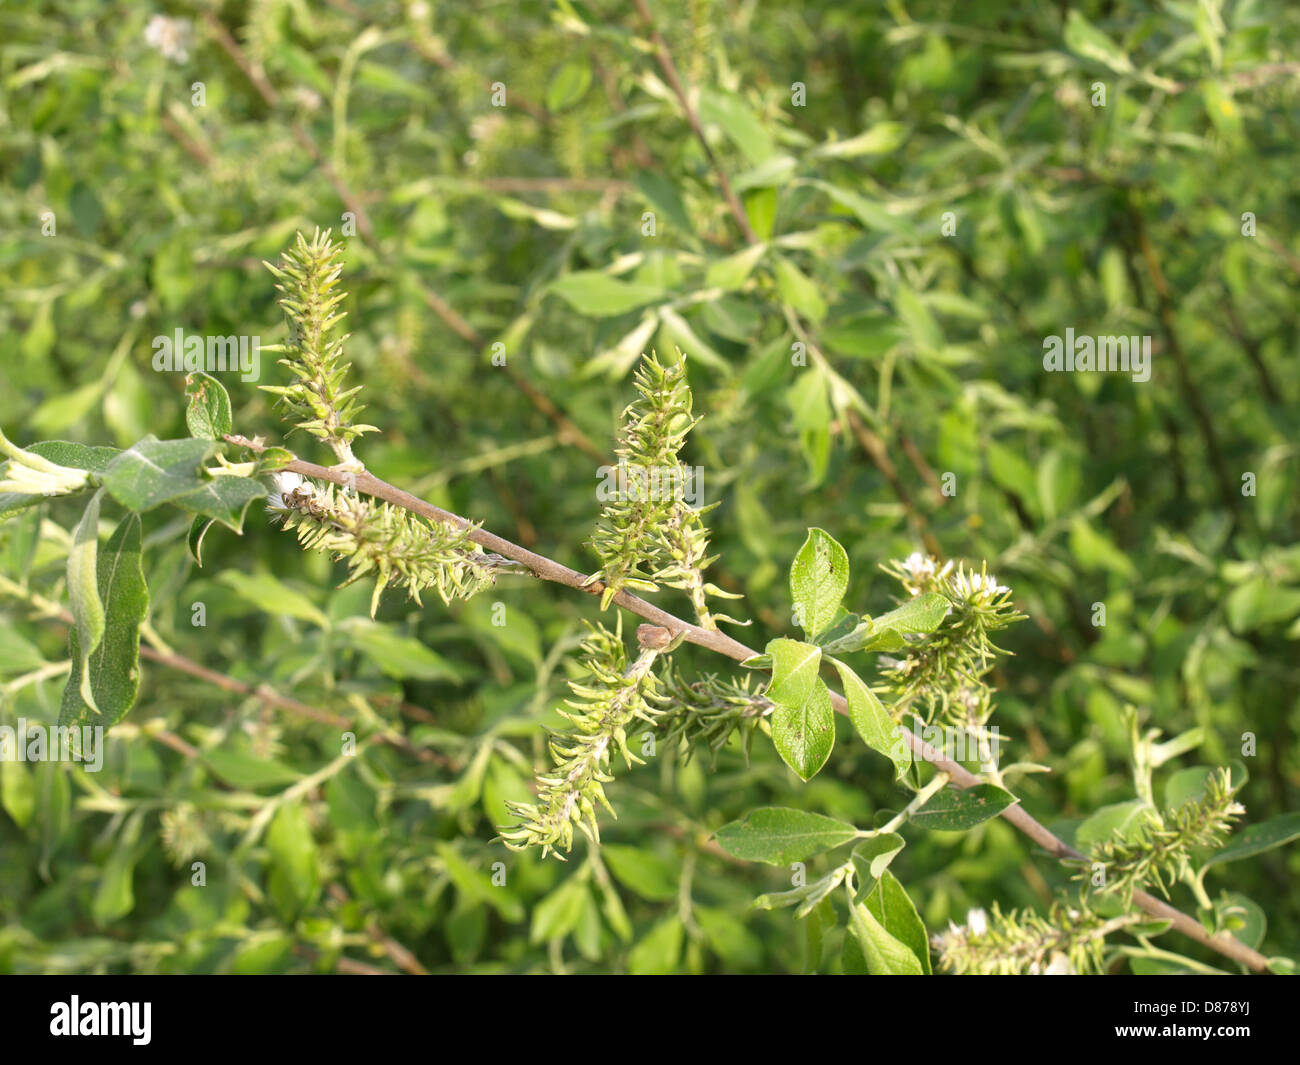 eared willow / Salix aurita / Ohr-Weide Stock Photo